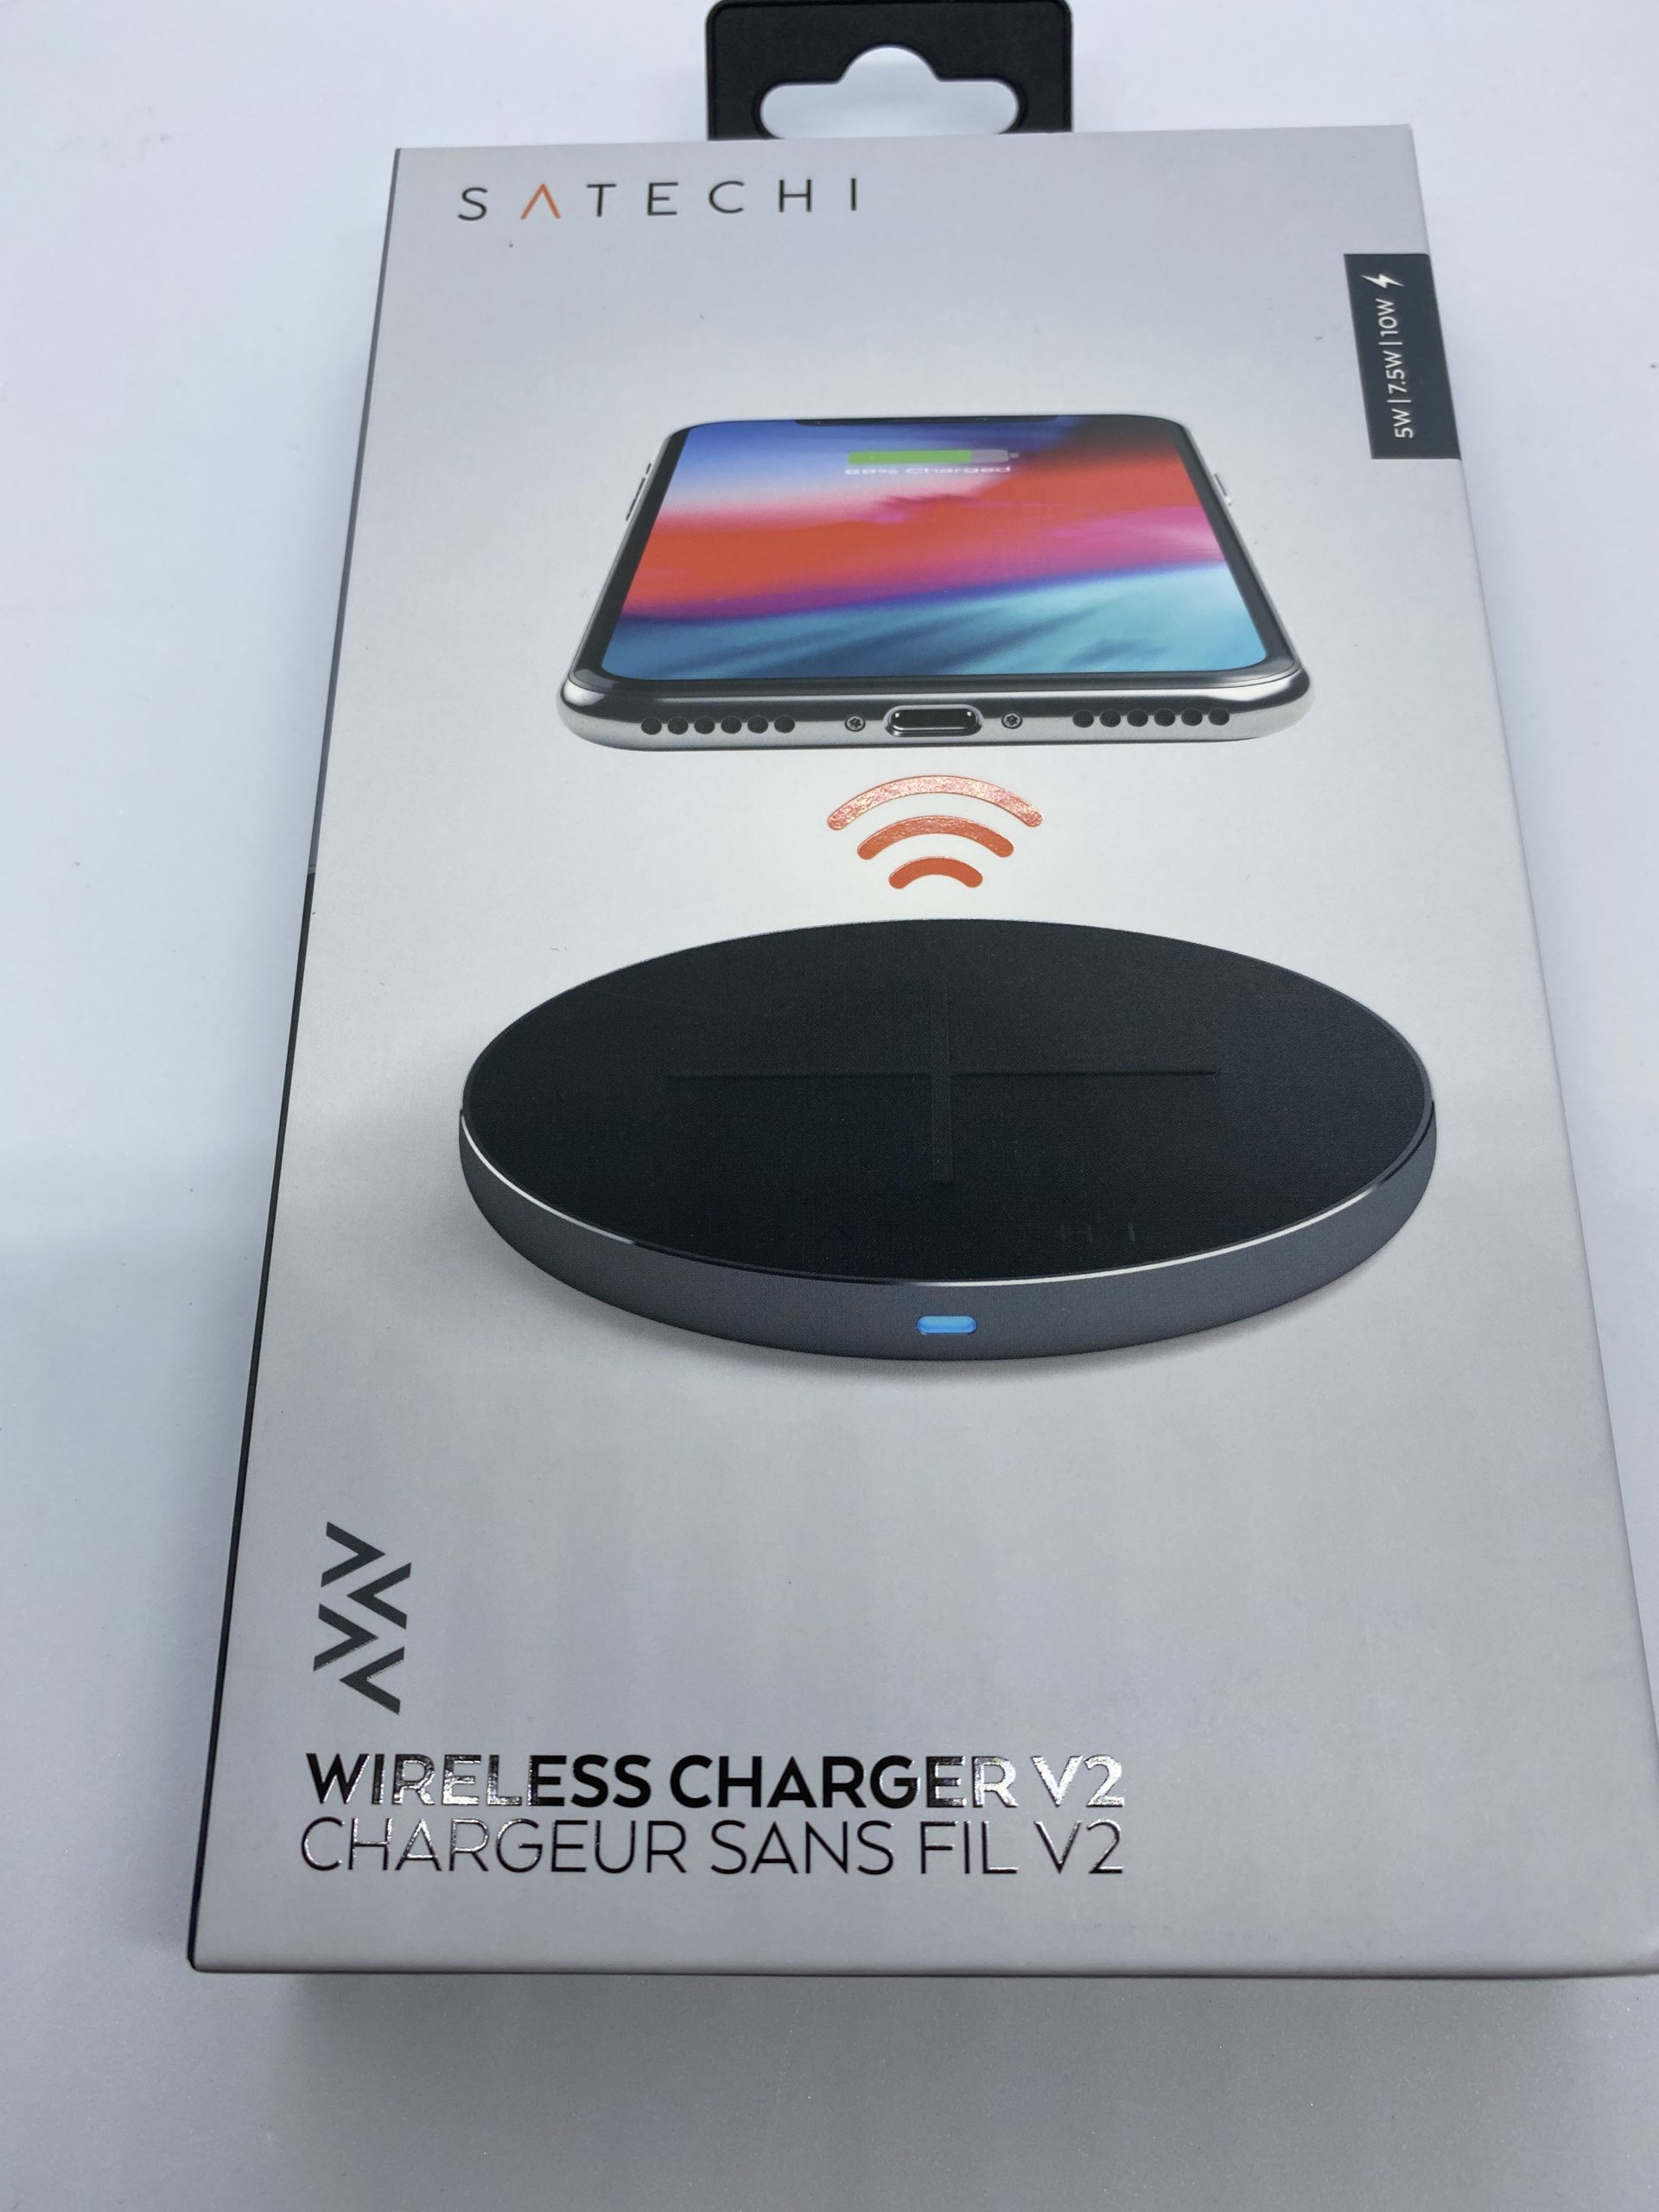 Satechi Wireless Charger V2 購入レビュー Pd Qc対応の次世代ワイヤレス充電機 Gadget Nyaa Apple ガジェットブログ